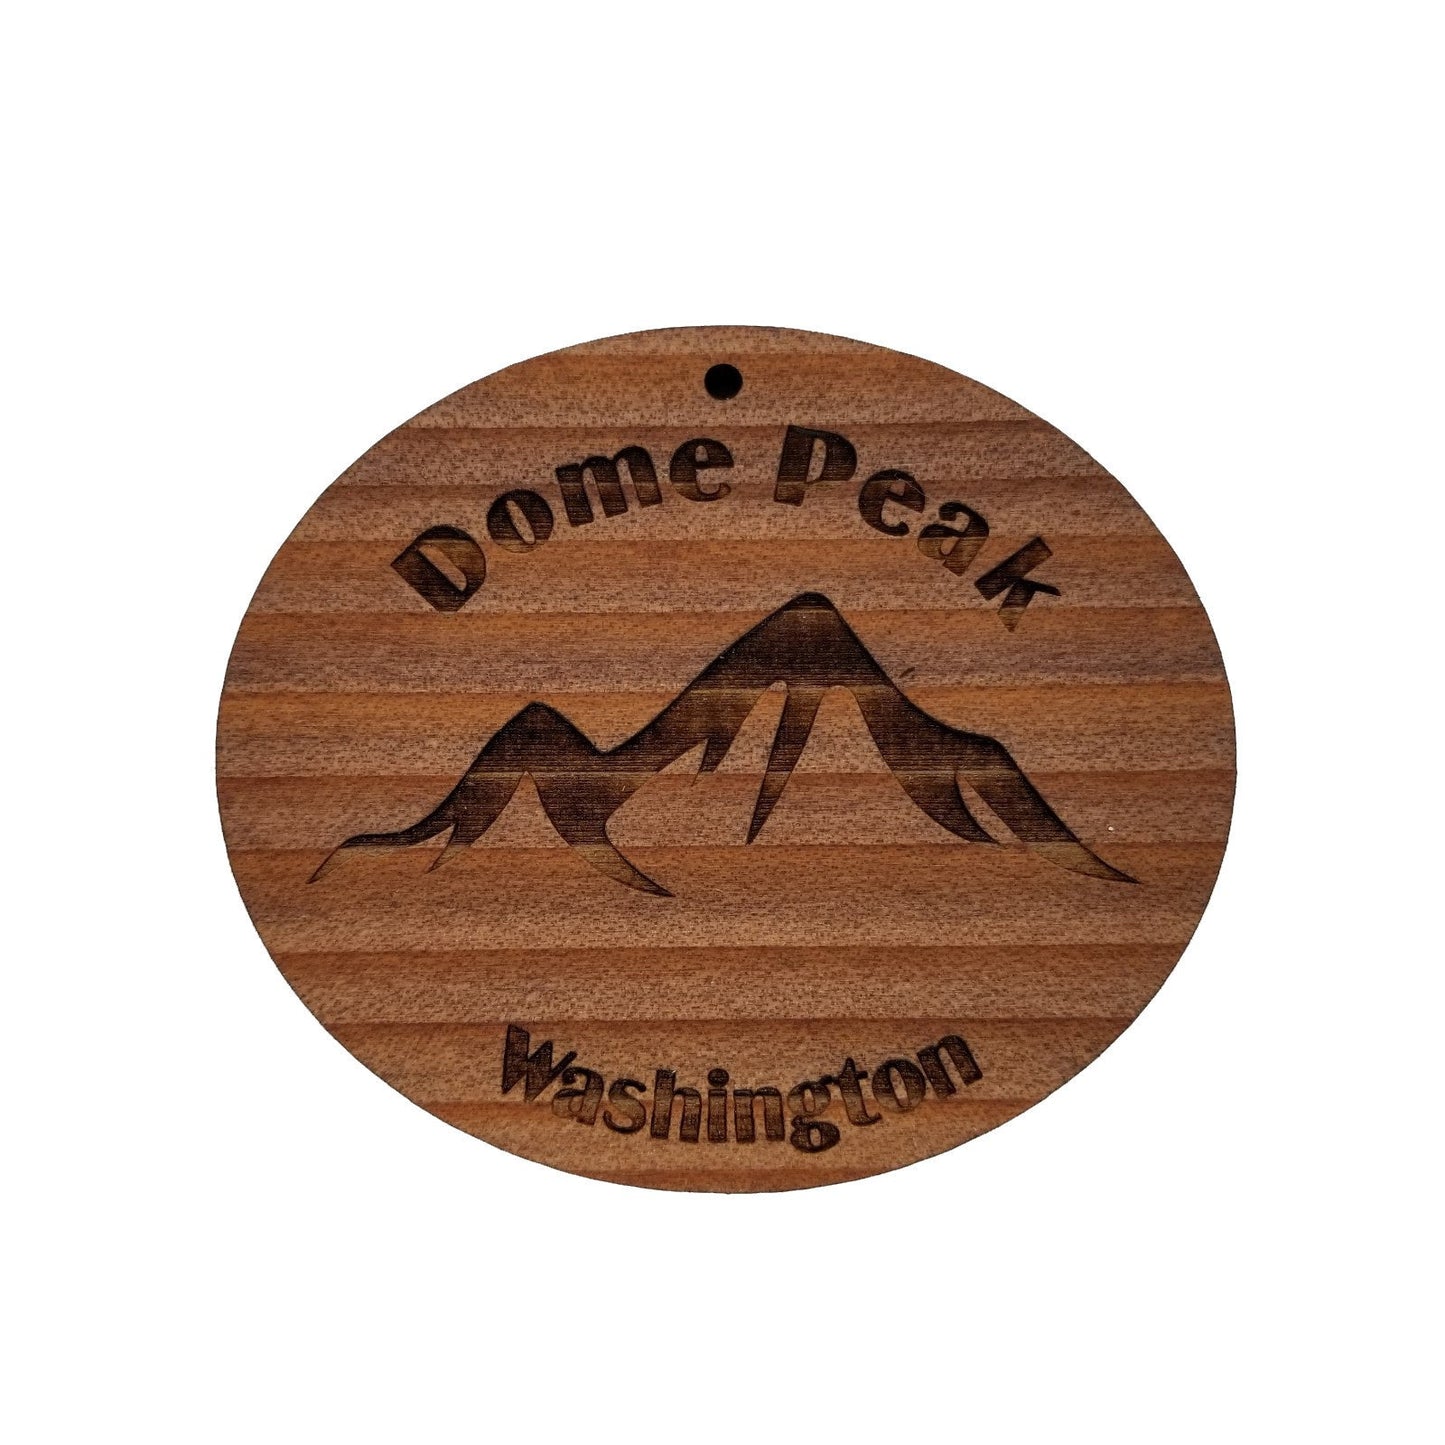 Wholesale Dome Peak Ornament Wood Washington Souvenir Mountain Climbing Dome Glacier WA Cascades